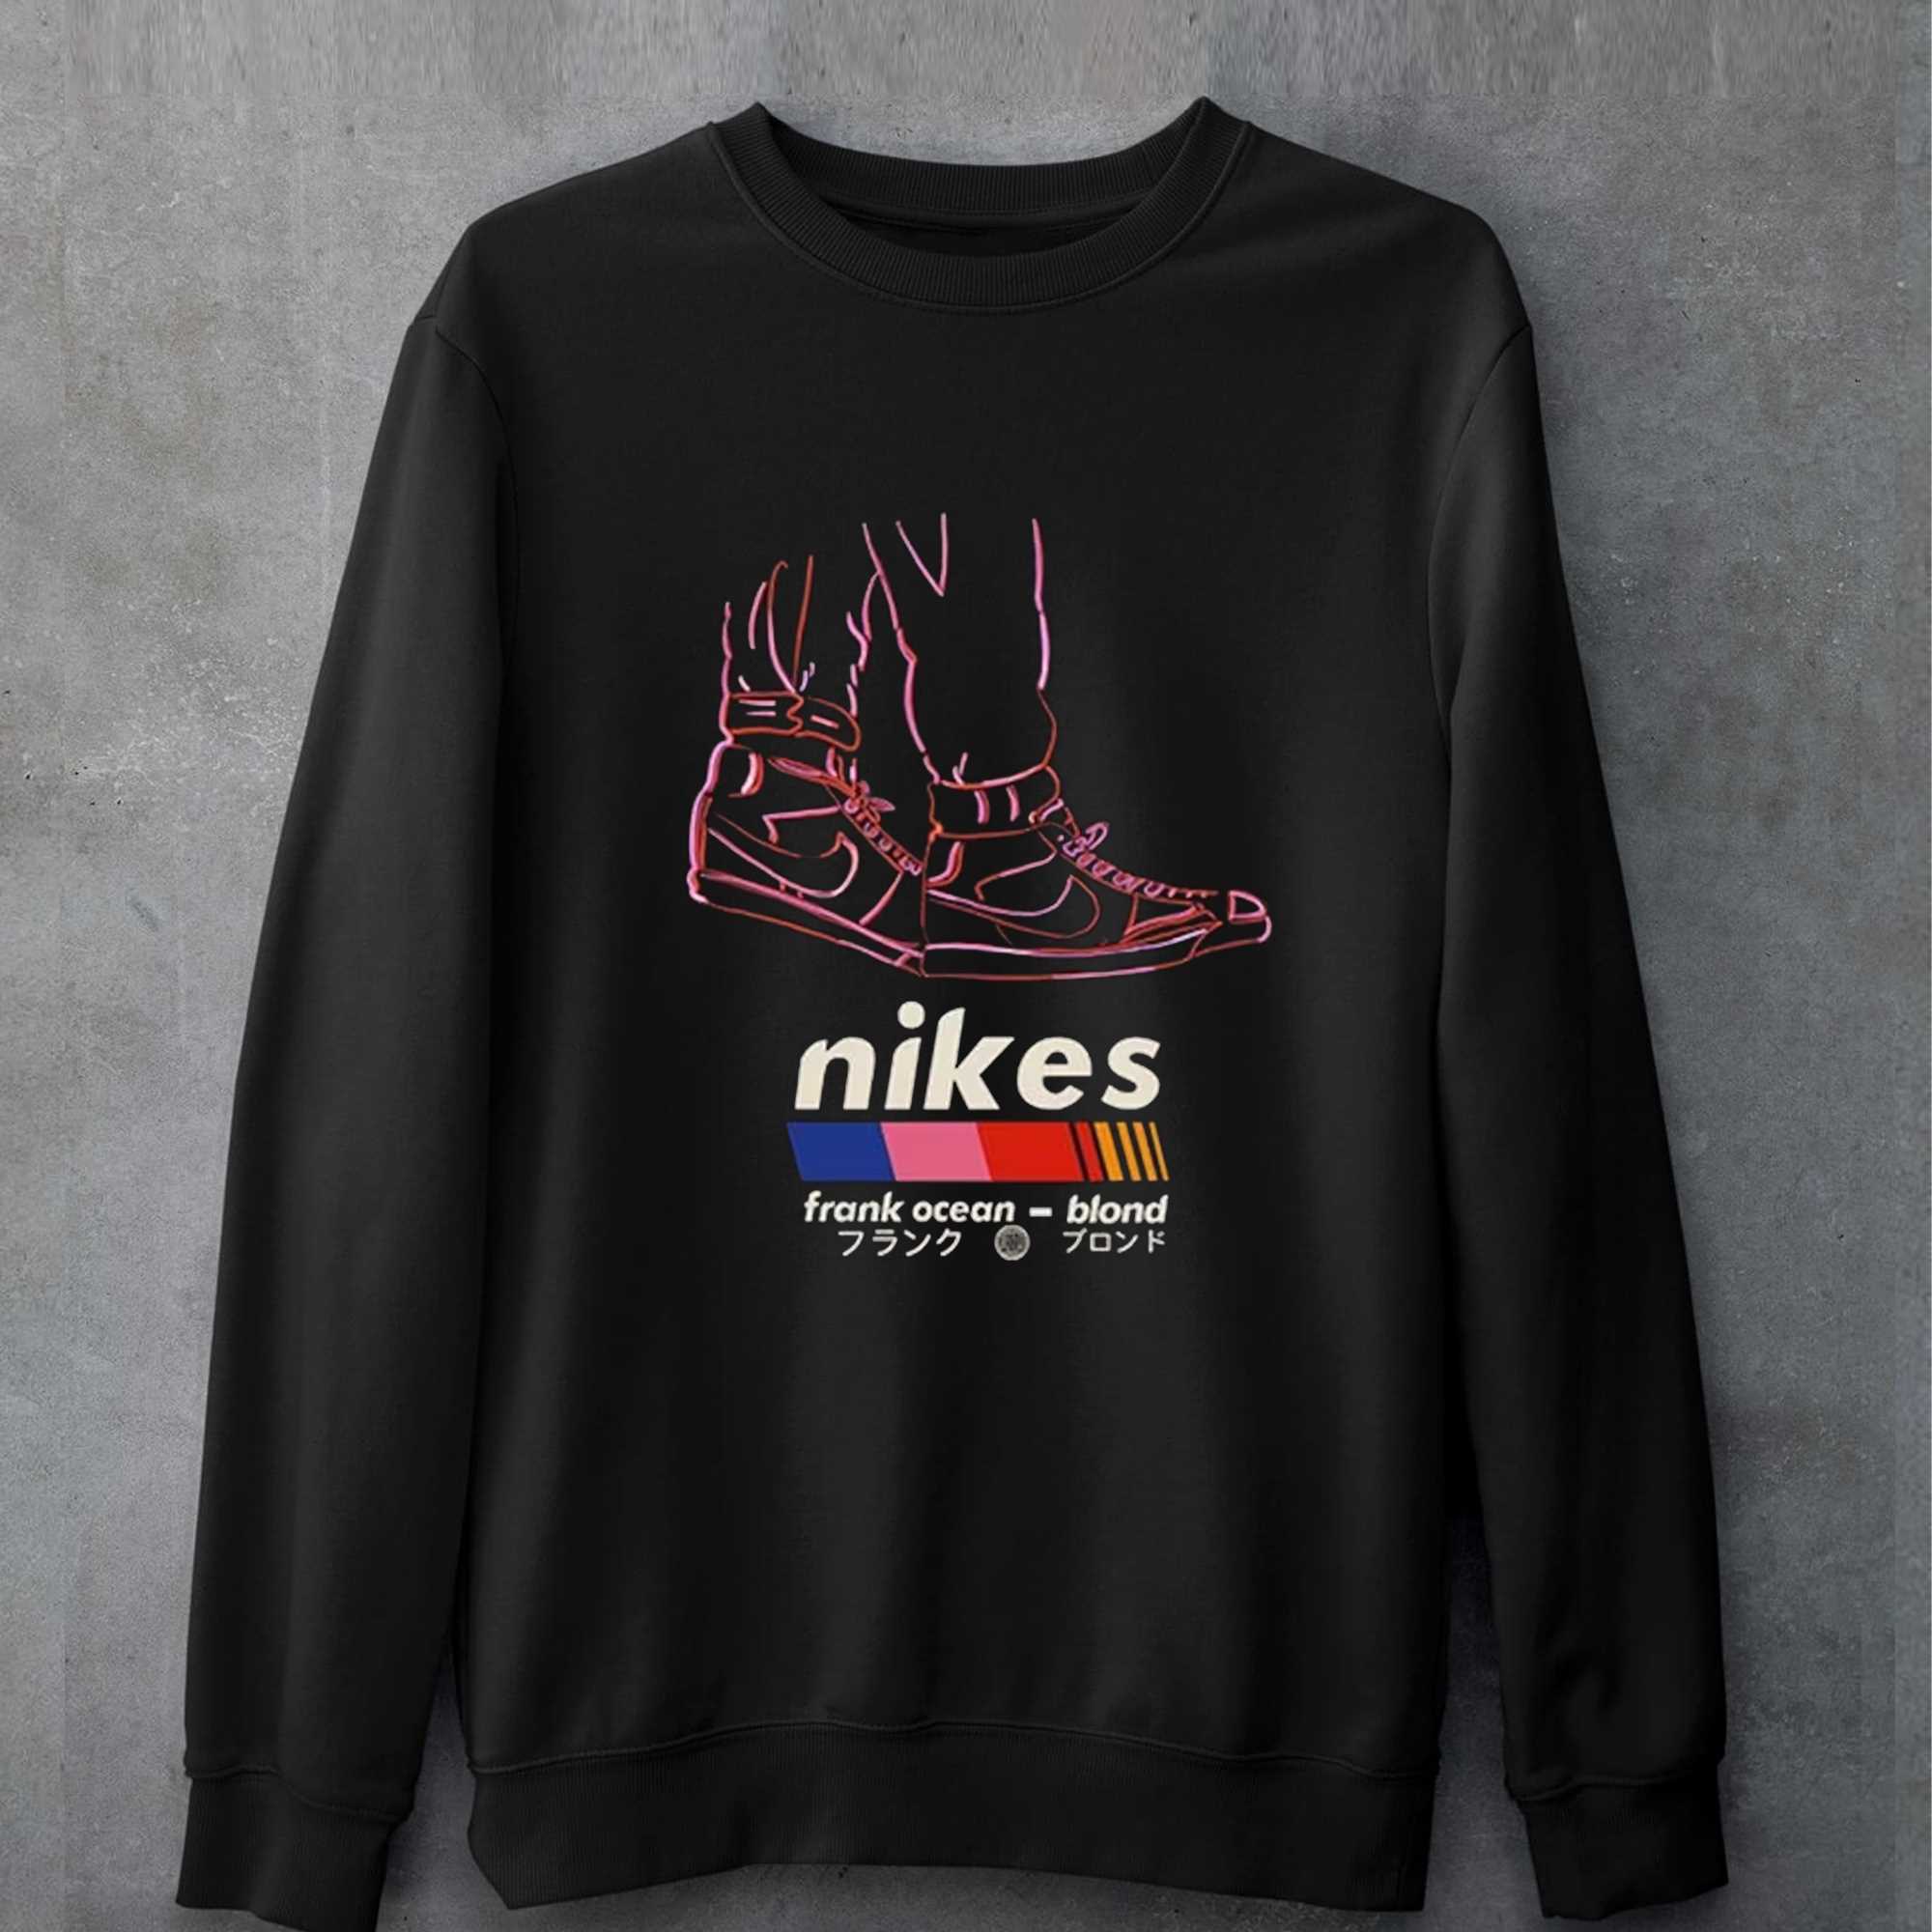 Frank Ocean Blond Nikes - Shibtee Clothing